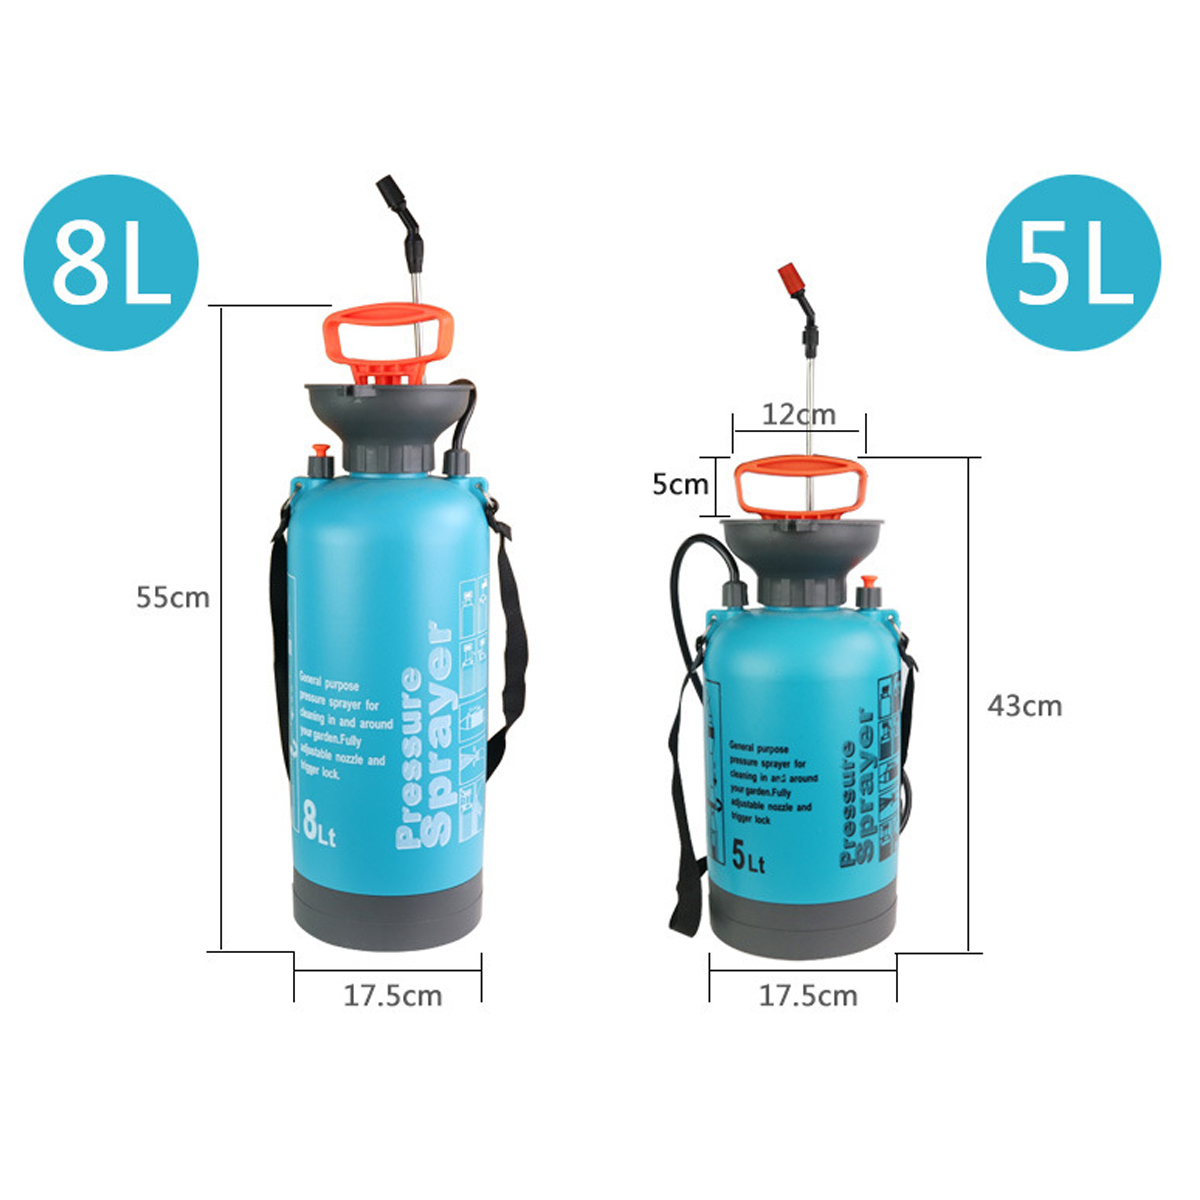 5L--8L-Garden-Pressure-Sprayer-Portable-Hand-Pump-Chemical-Weed-Spray-Bottle-1688503-5